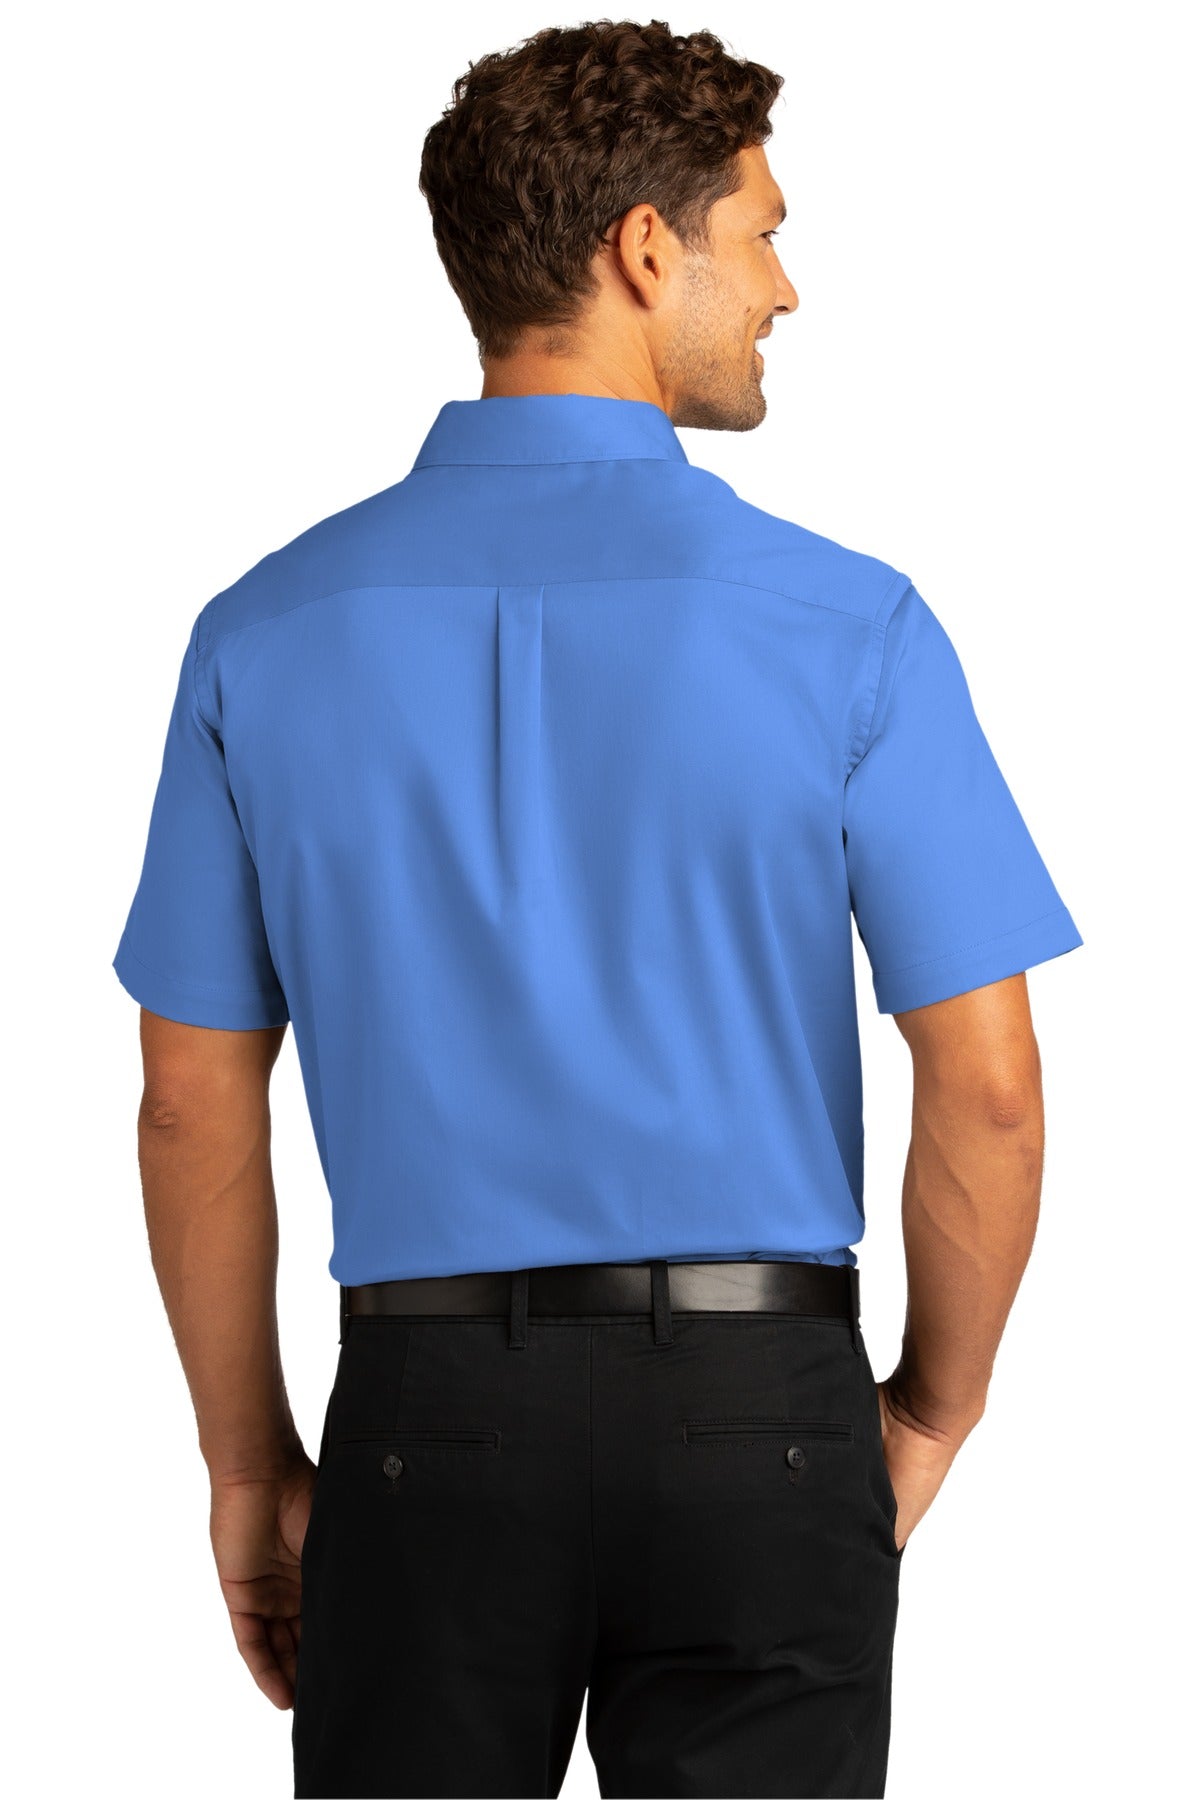 Port Authority Short Sleeve SuperPro React™ Twill Shirt. W809